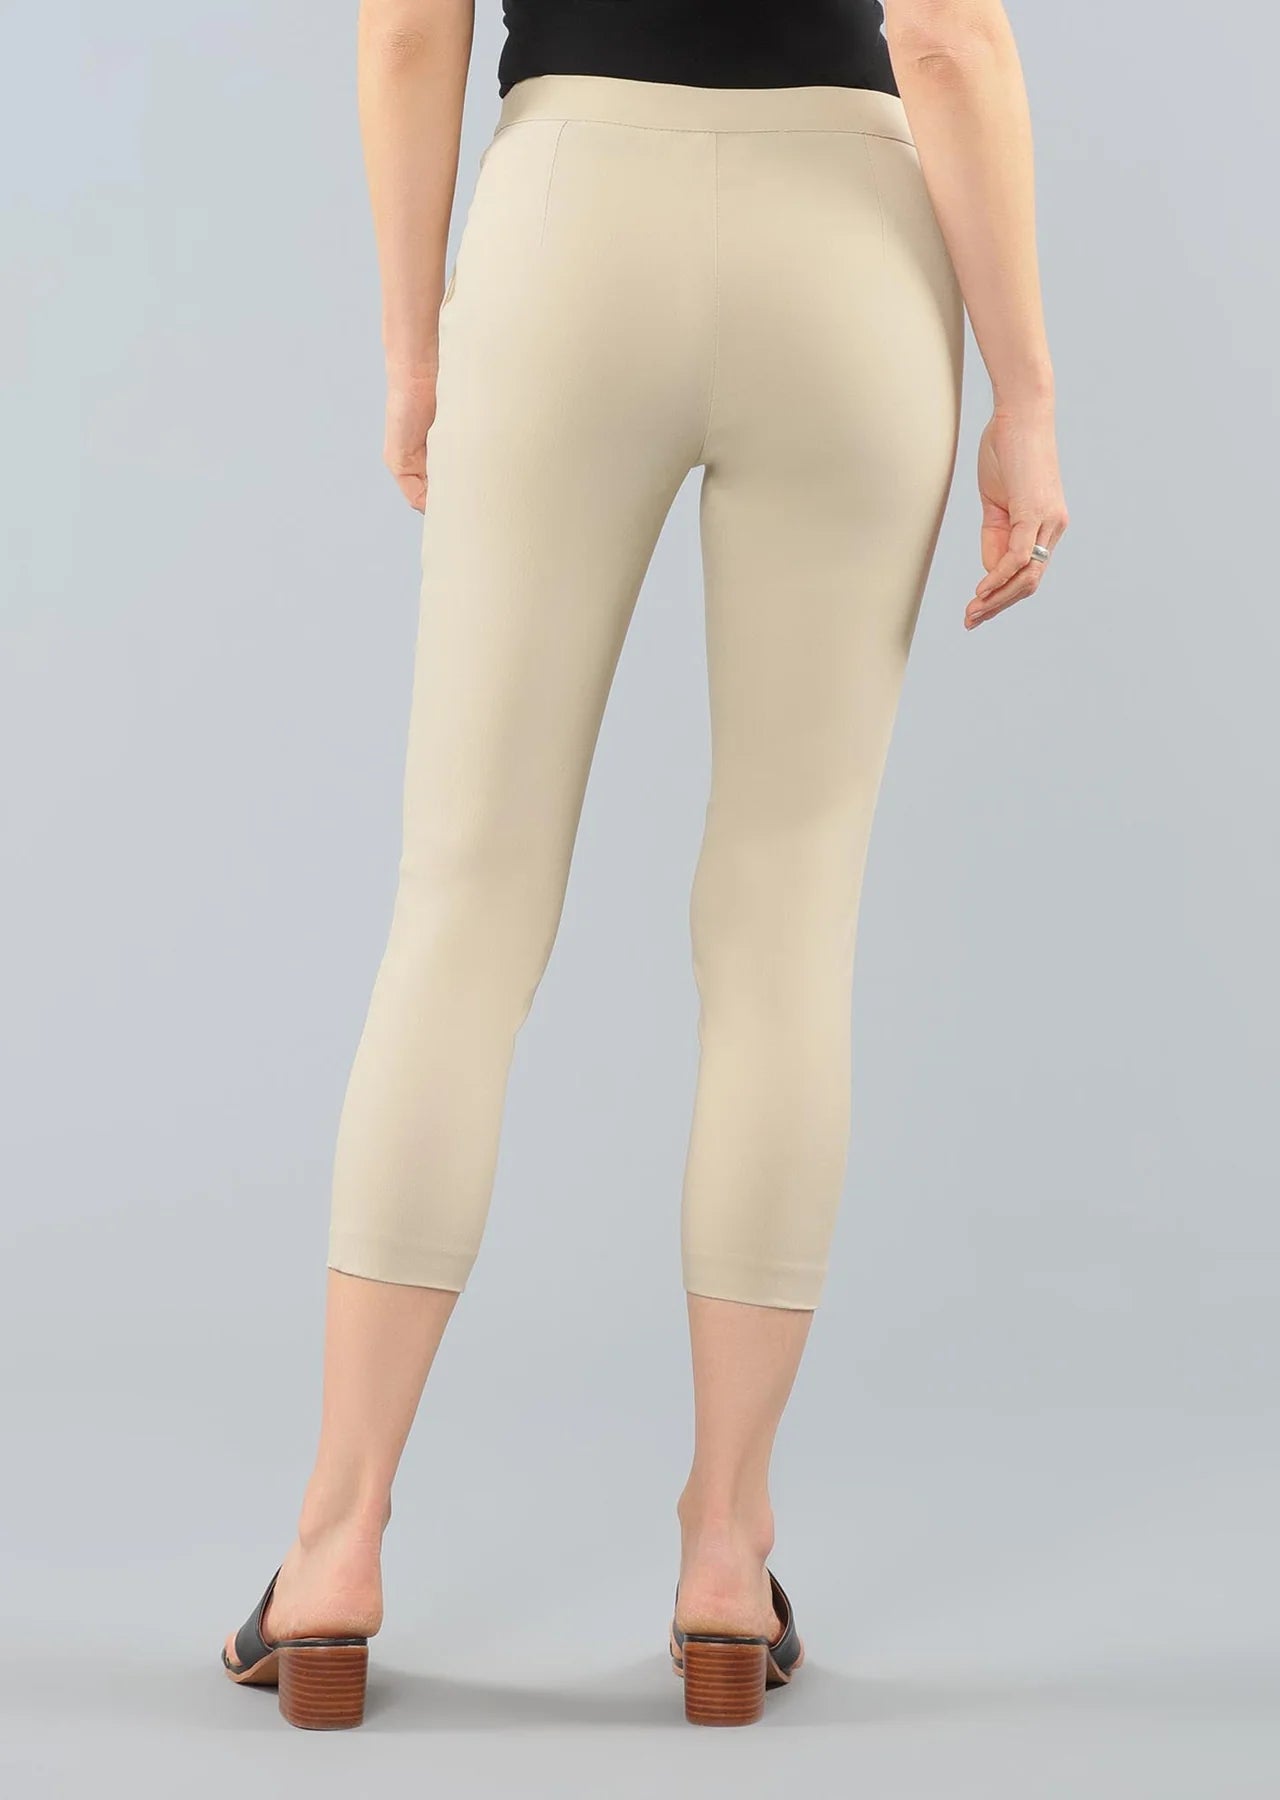 Thinny Crop Pants W/Pockets Magical Lycra Lisette L